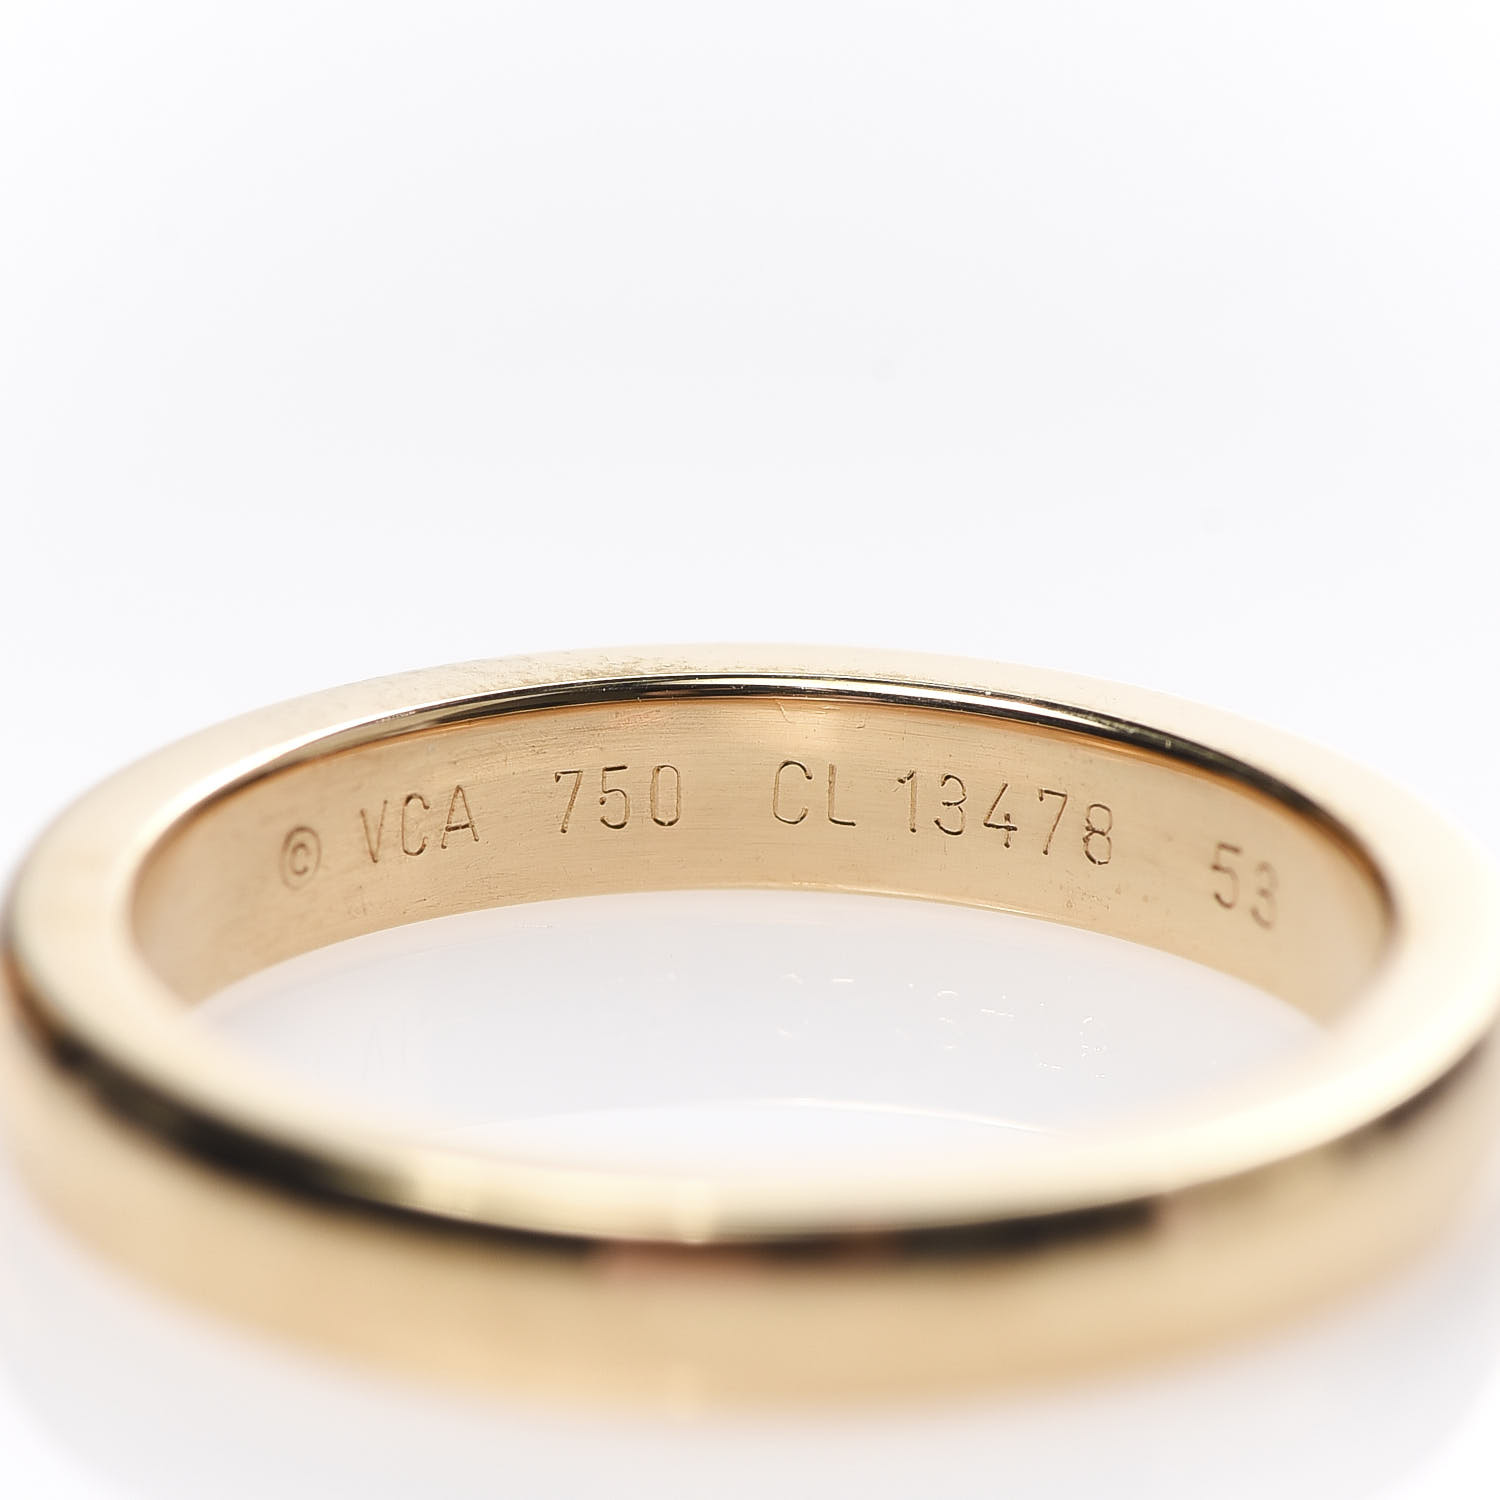 VAN CLEEF & ARPELS 18K Yellow Gold 3mm Wedding Band Ring 53 6.25 562957